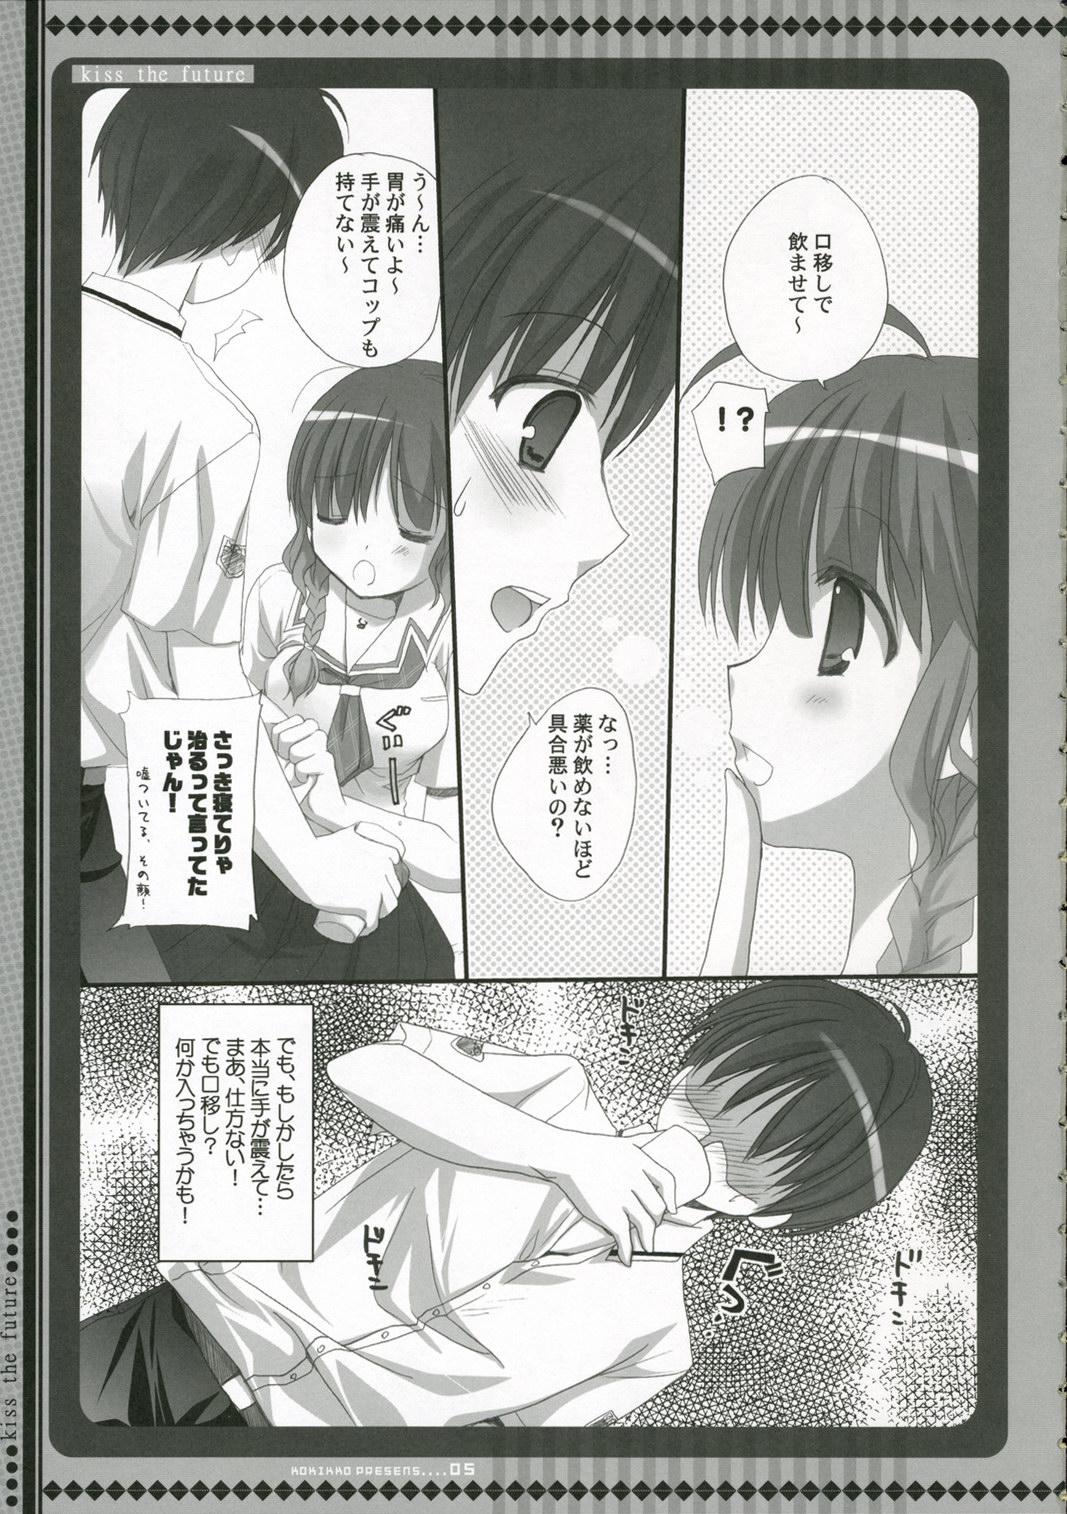 Amateurs Mirai ni Kiss o - Kiss the Future - Kimikiss Celebrity - Page 4